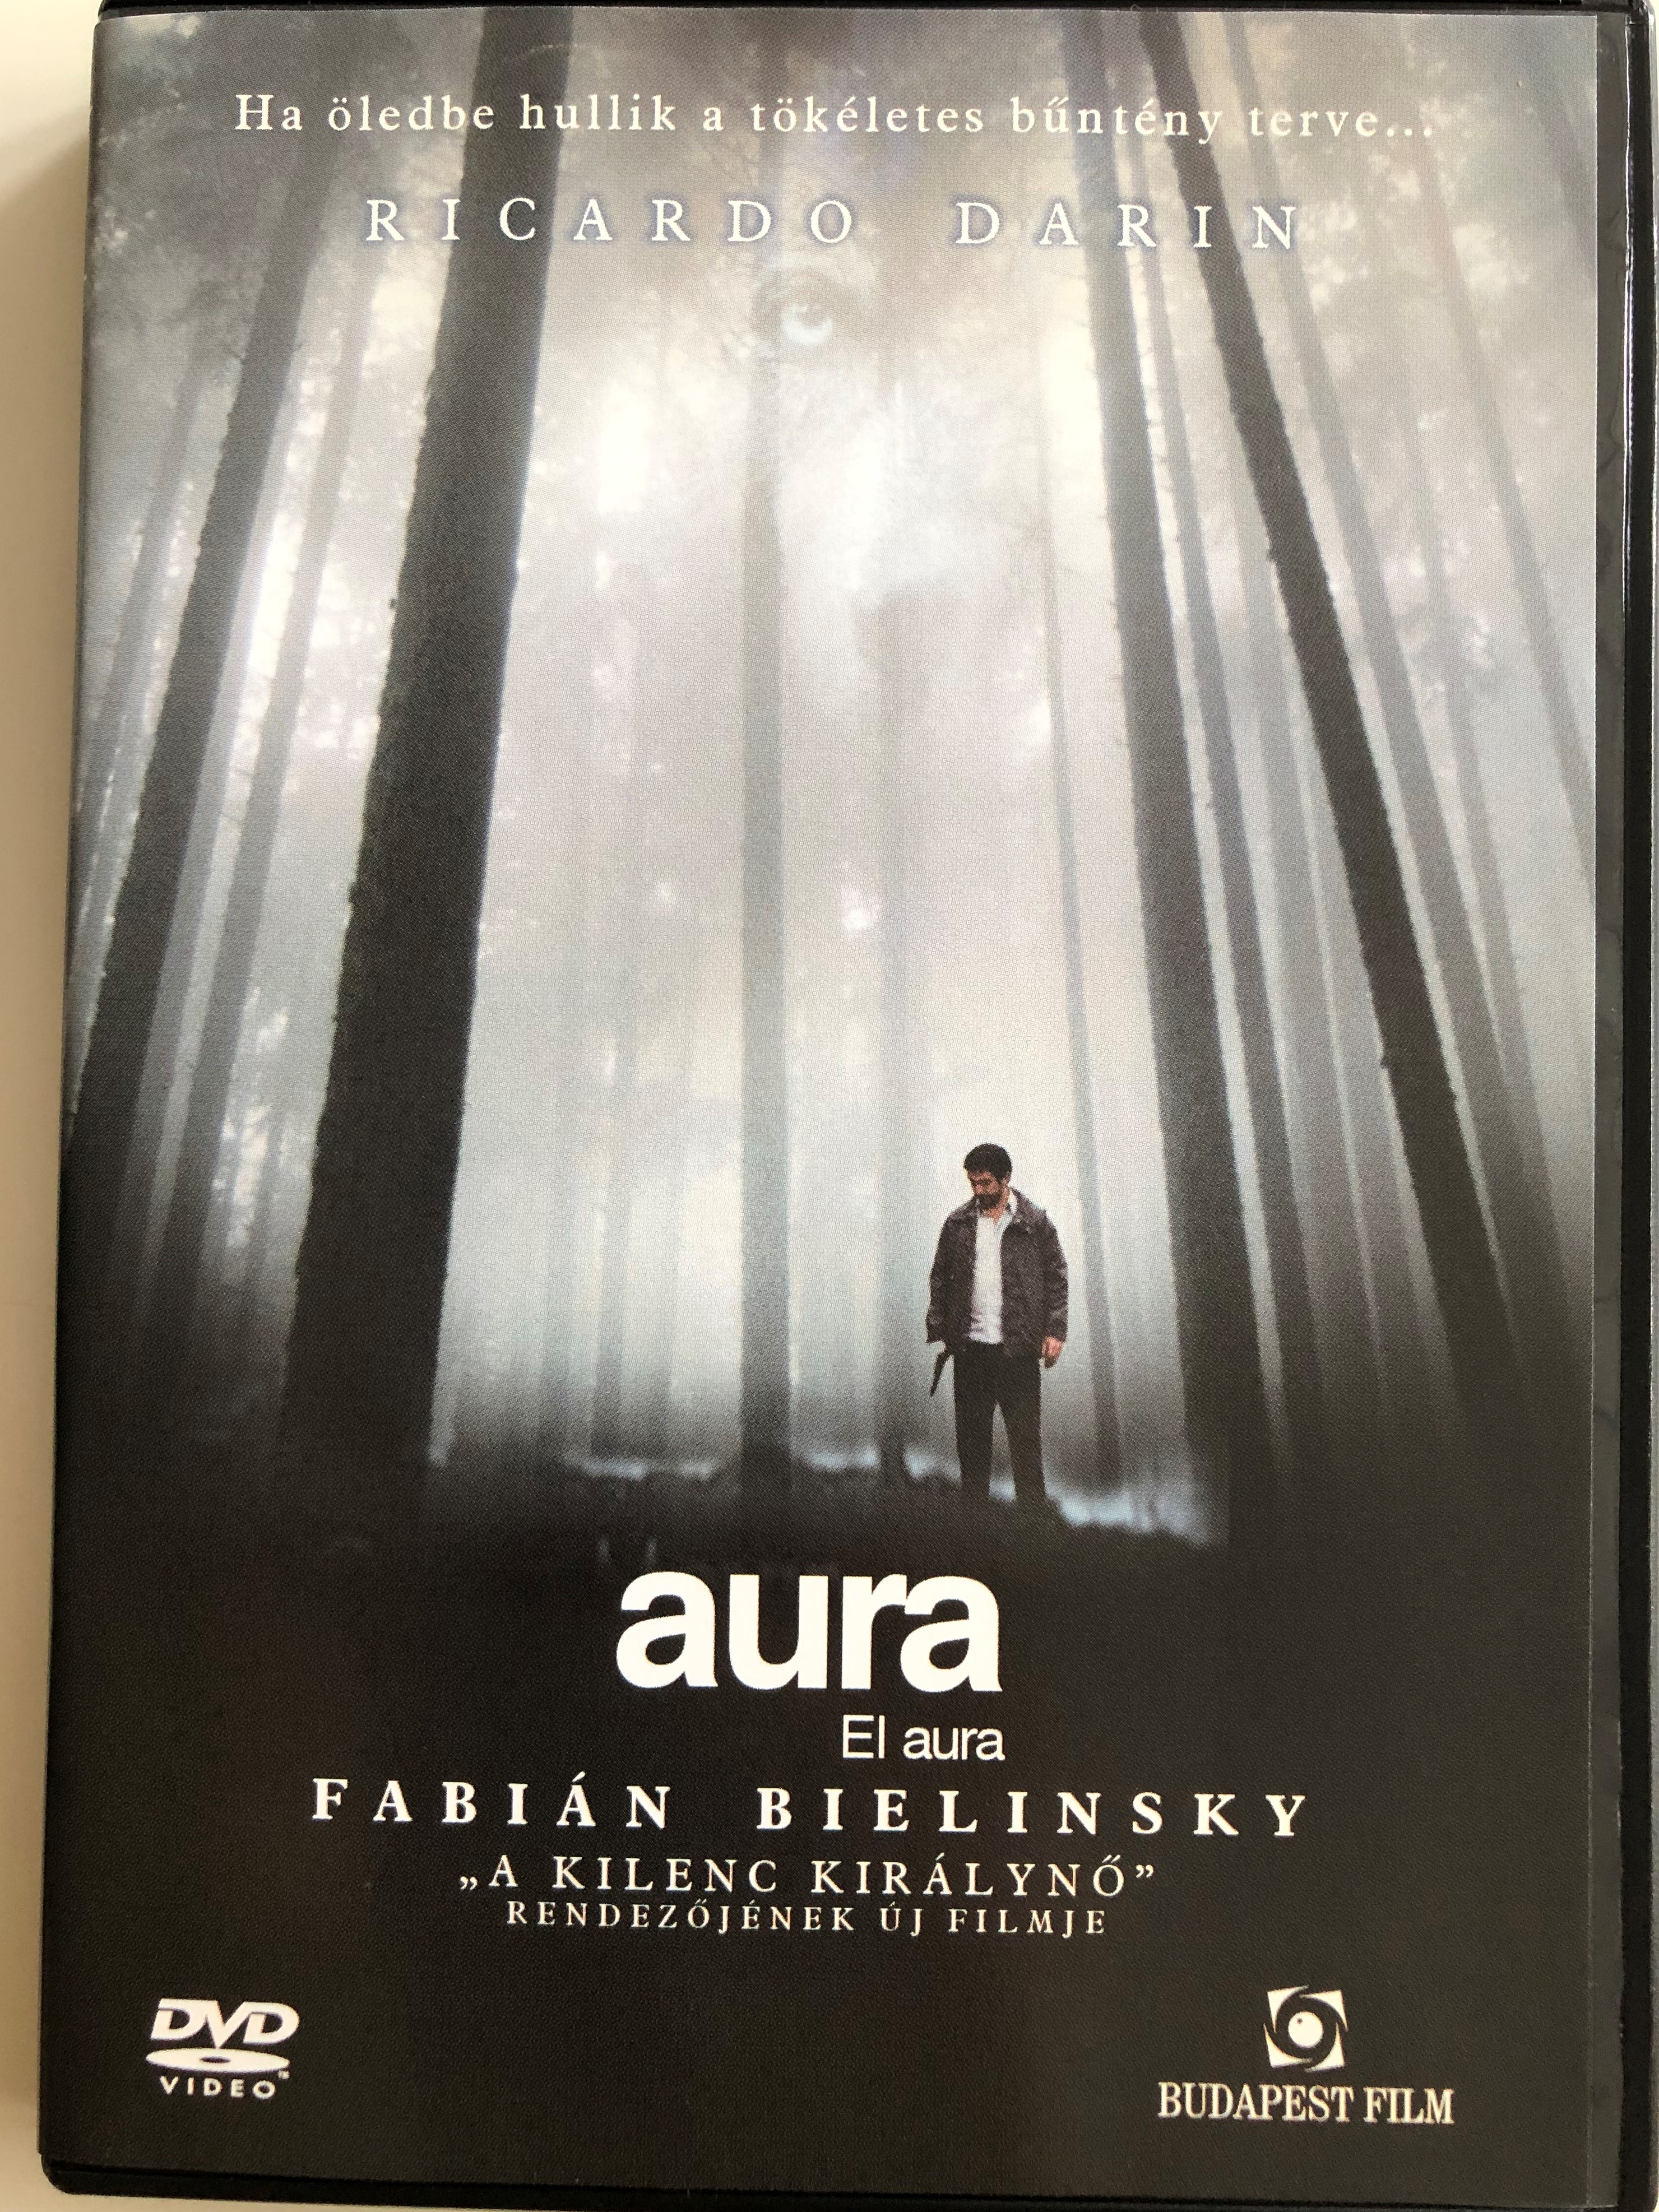 El aura DVD 2005 Aura - The Aura / Directed by Fabián Bielinsky / Starring:  Ricardo Darín, Dolores Fonzi, Alejandro Awada, Pablo Cedrón, Jorge D'Elia -  bibleinmylanguage